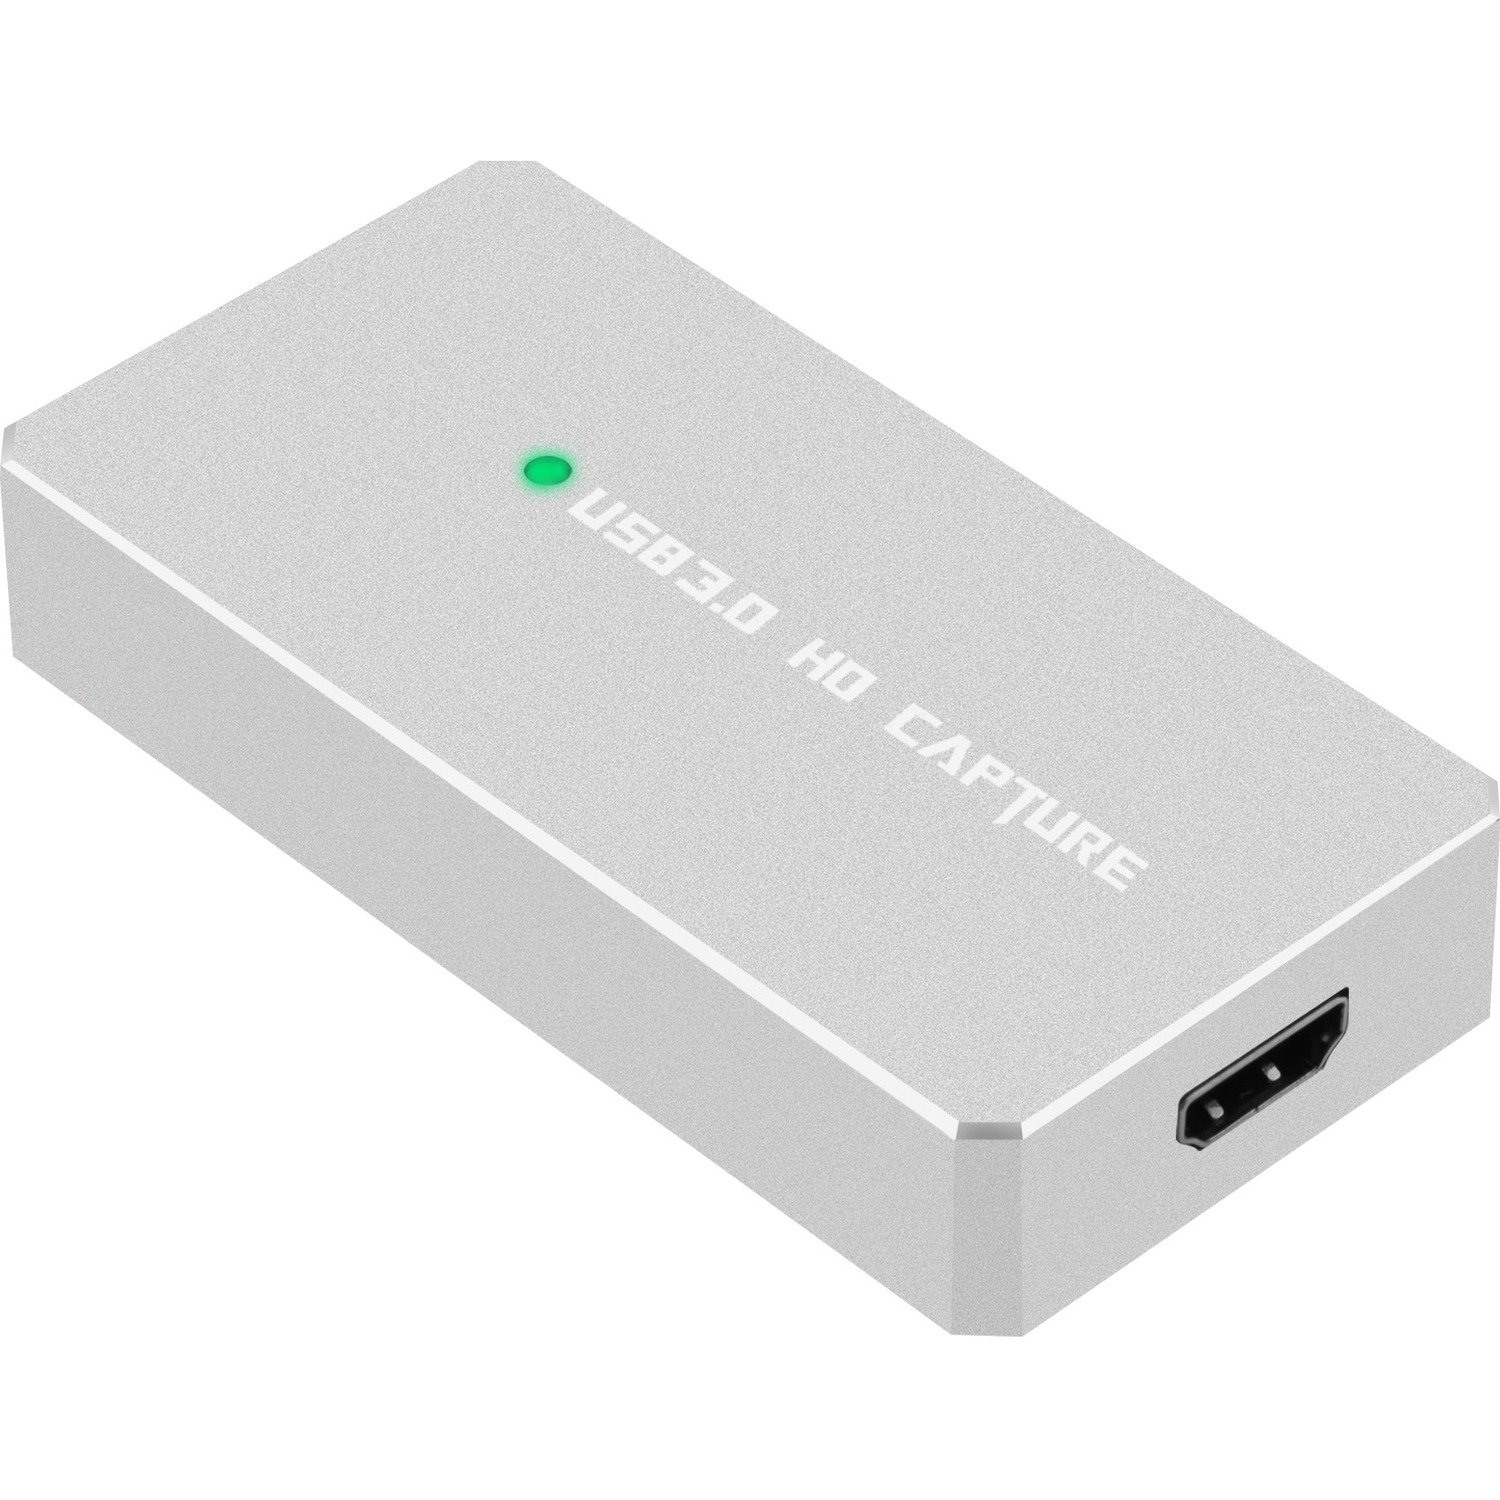 SIIG USB 3.0 HDMI Capture Adapter